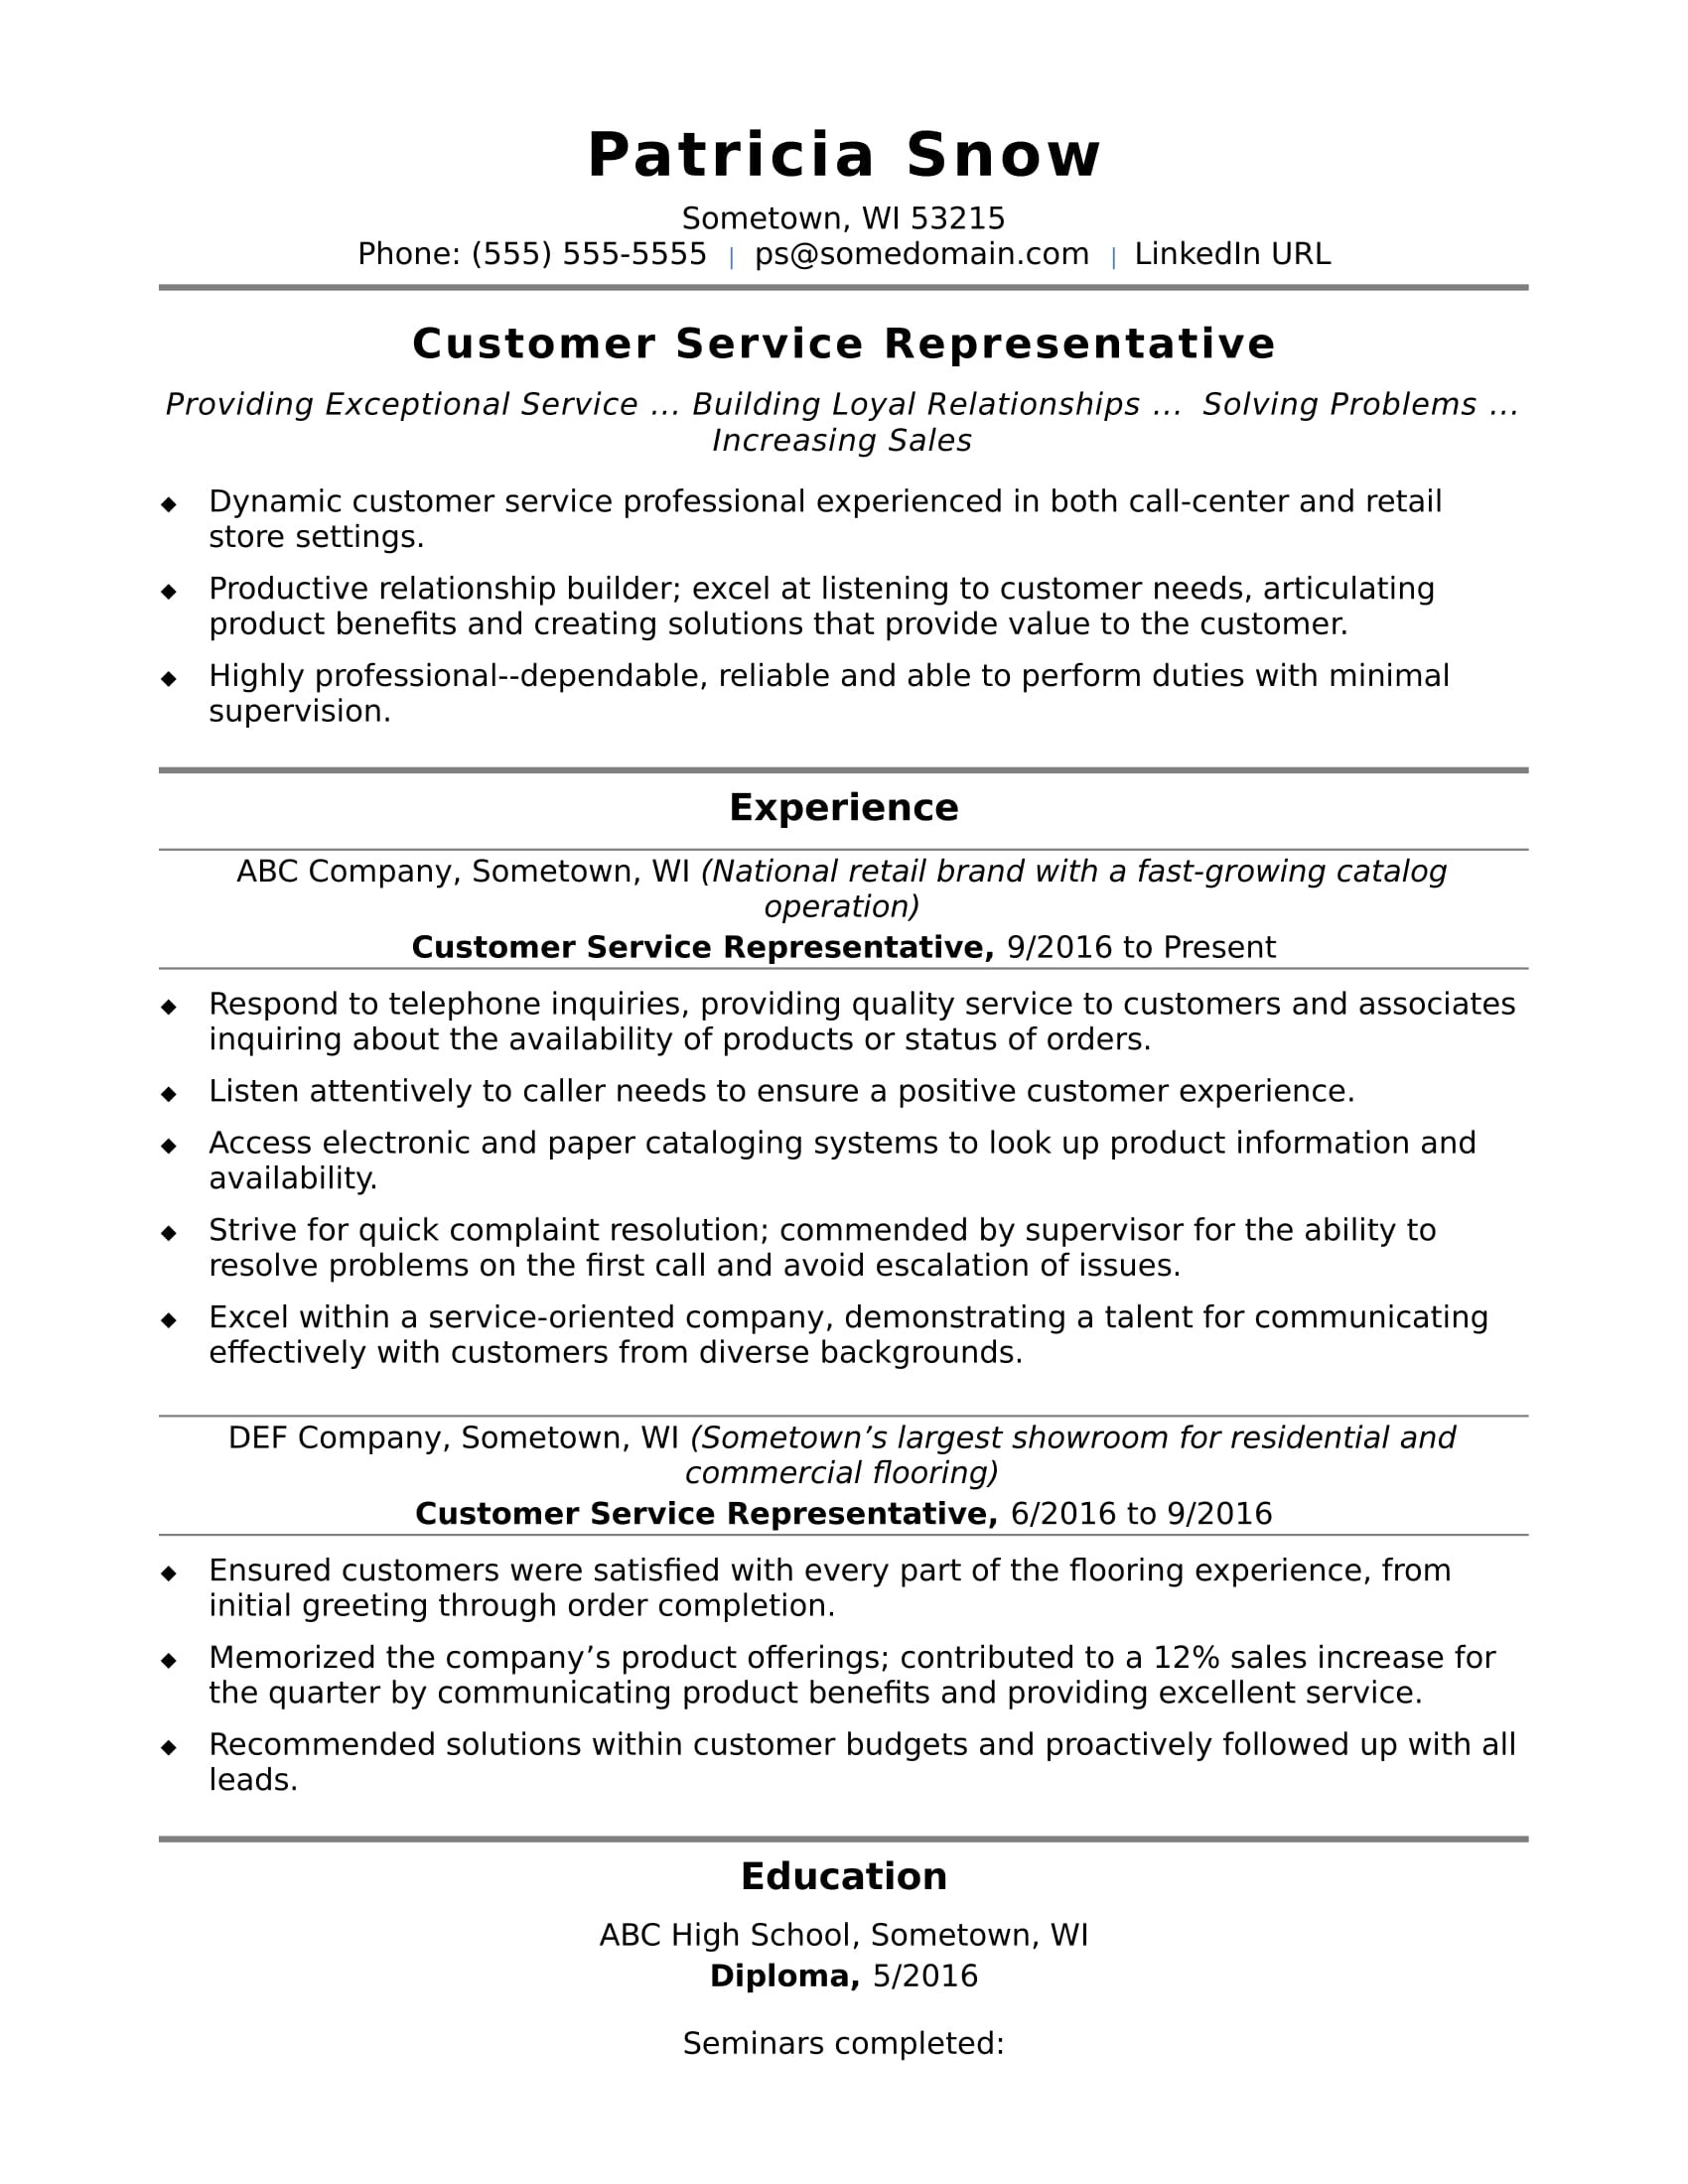 Professional Customer Service Summary Resume Sample Entry-level Customer Service Resume Sample Monster.com